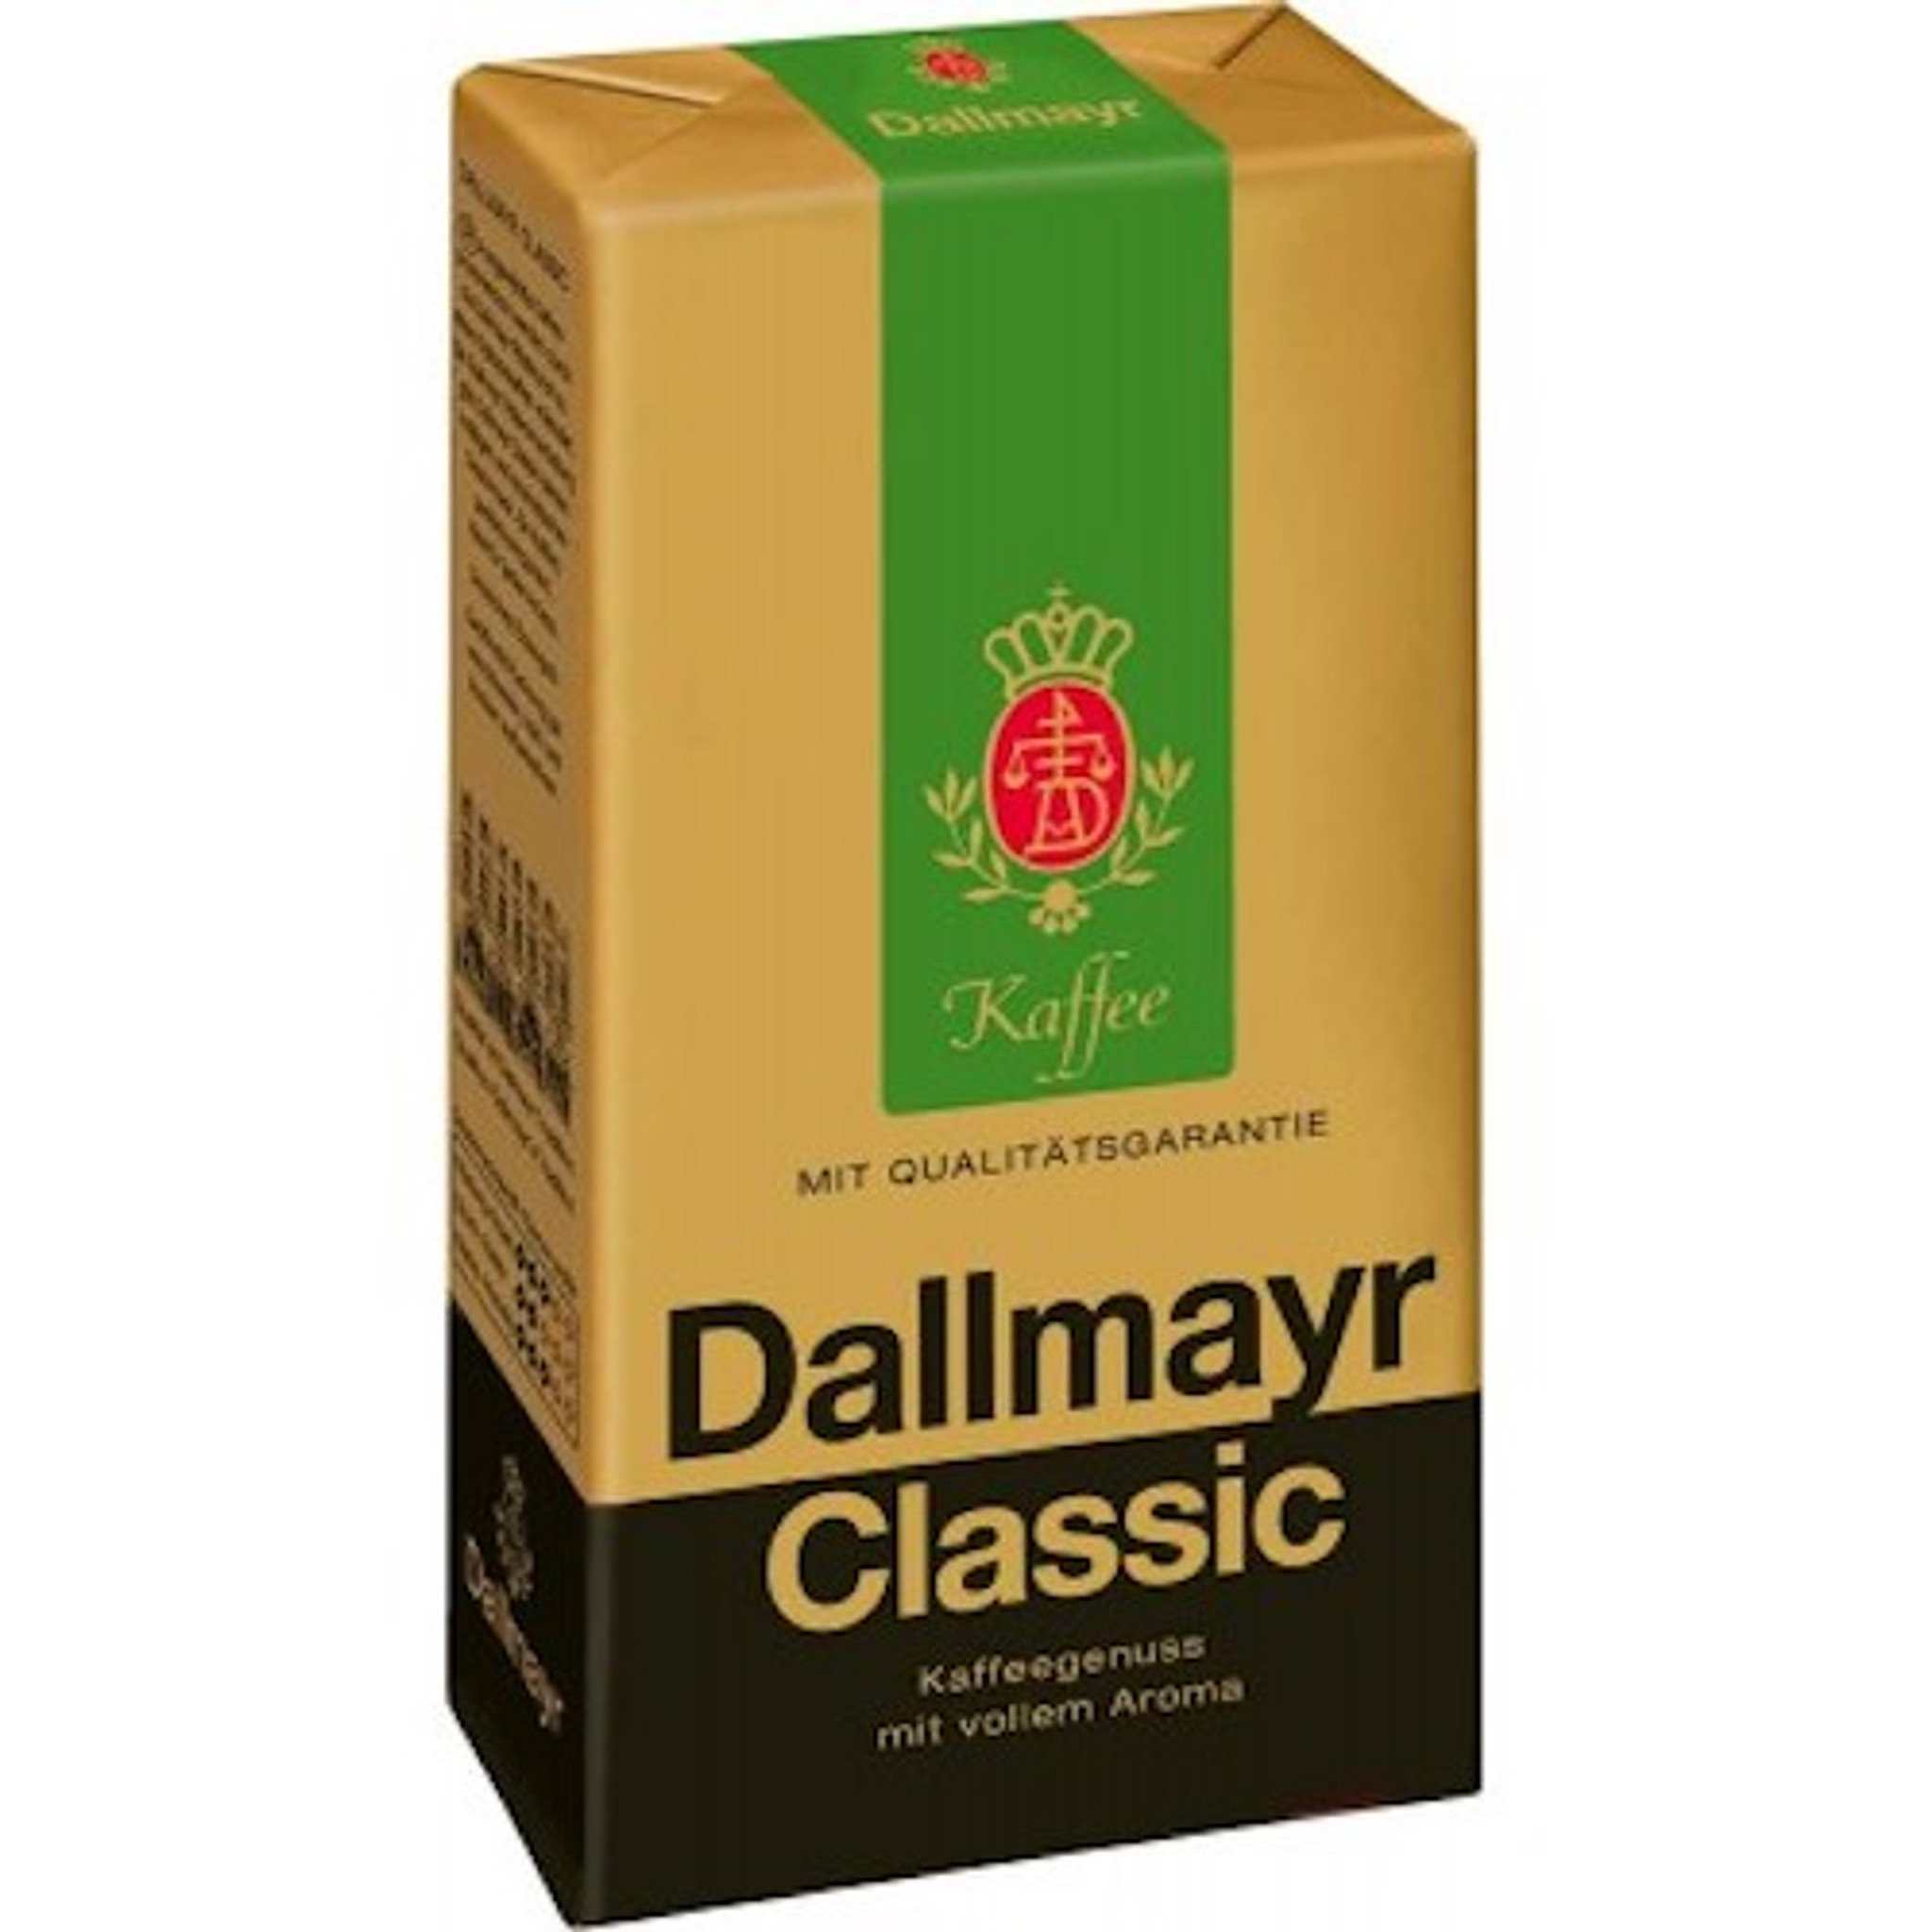 - Dallmayr of Classic The Taste Ground Germany Coffee 8.8 oz. -